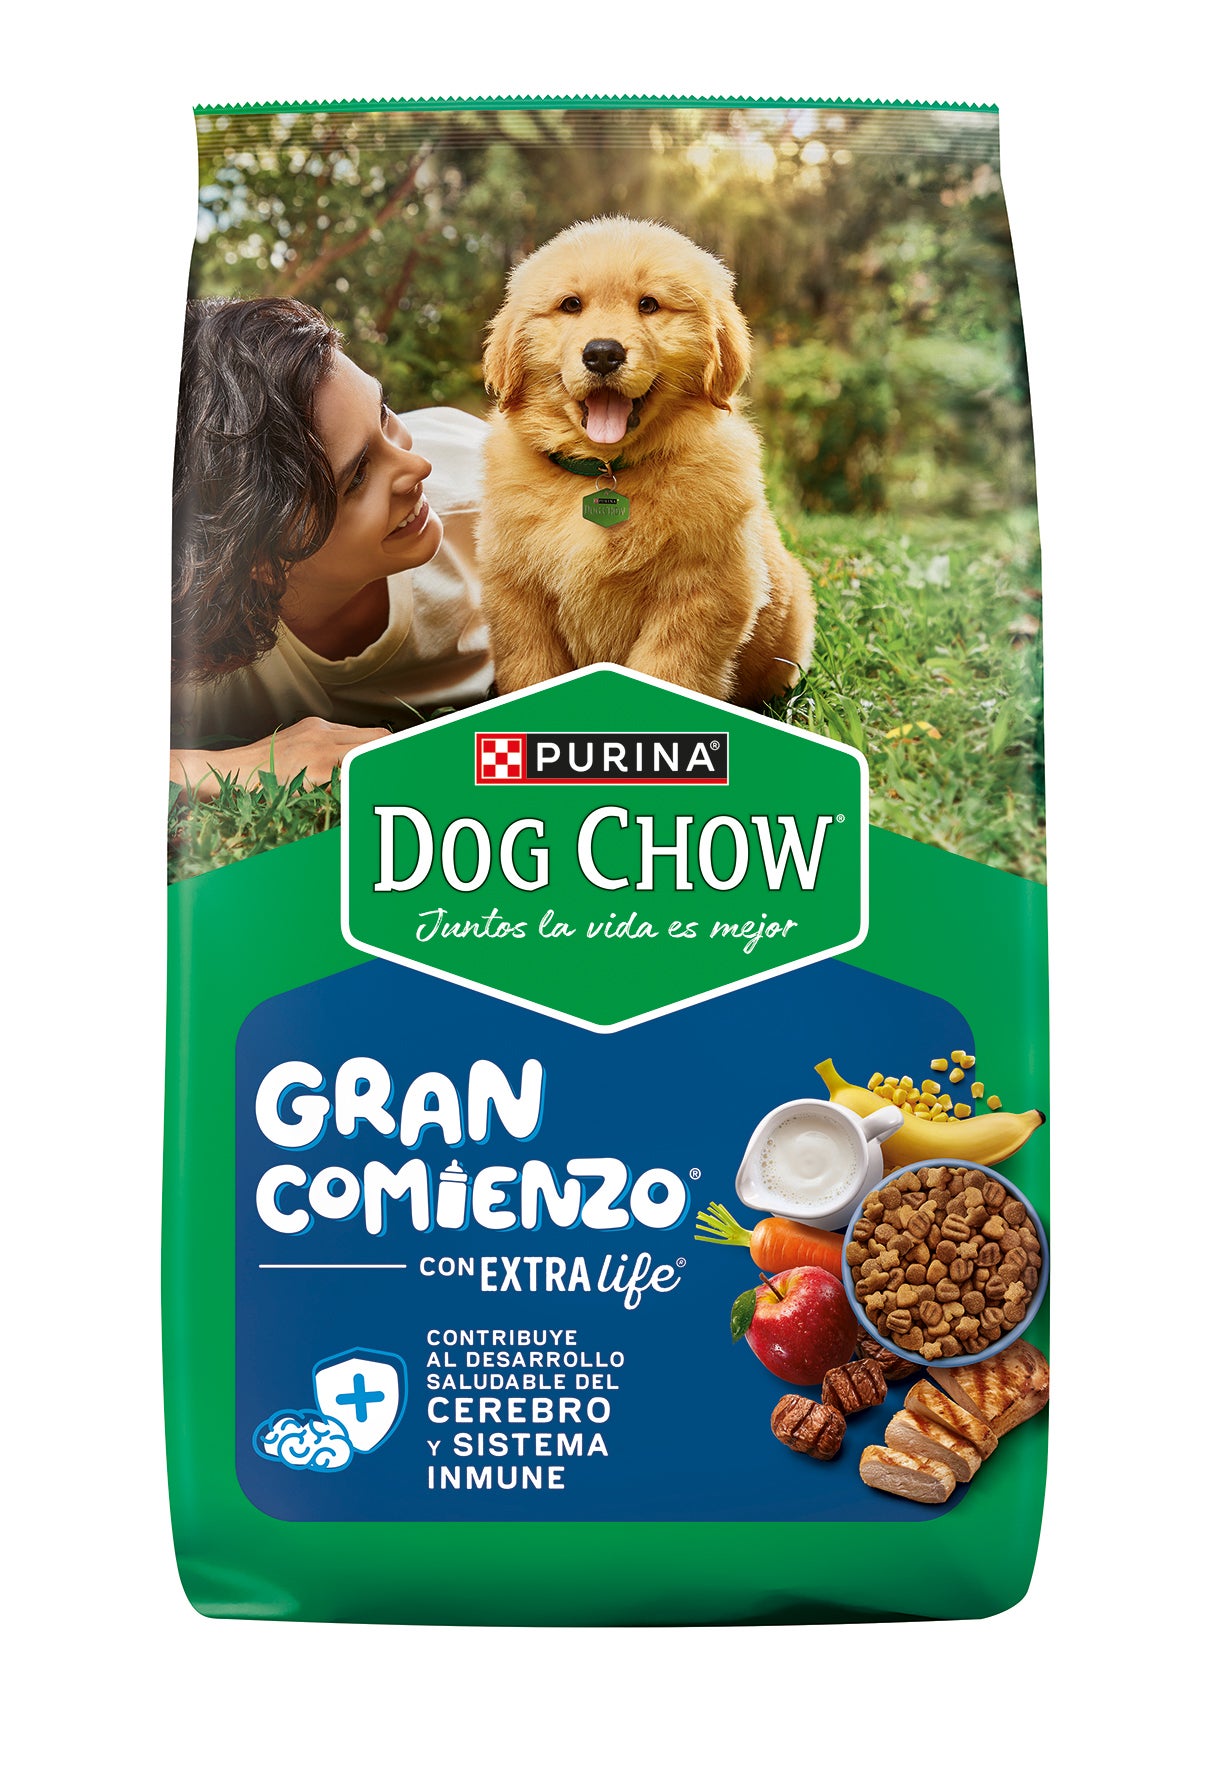 Dog Chow Gran comienzo